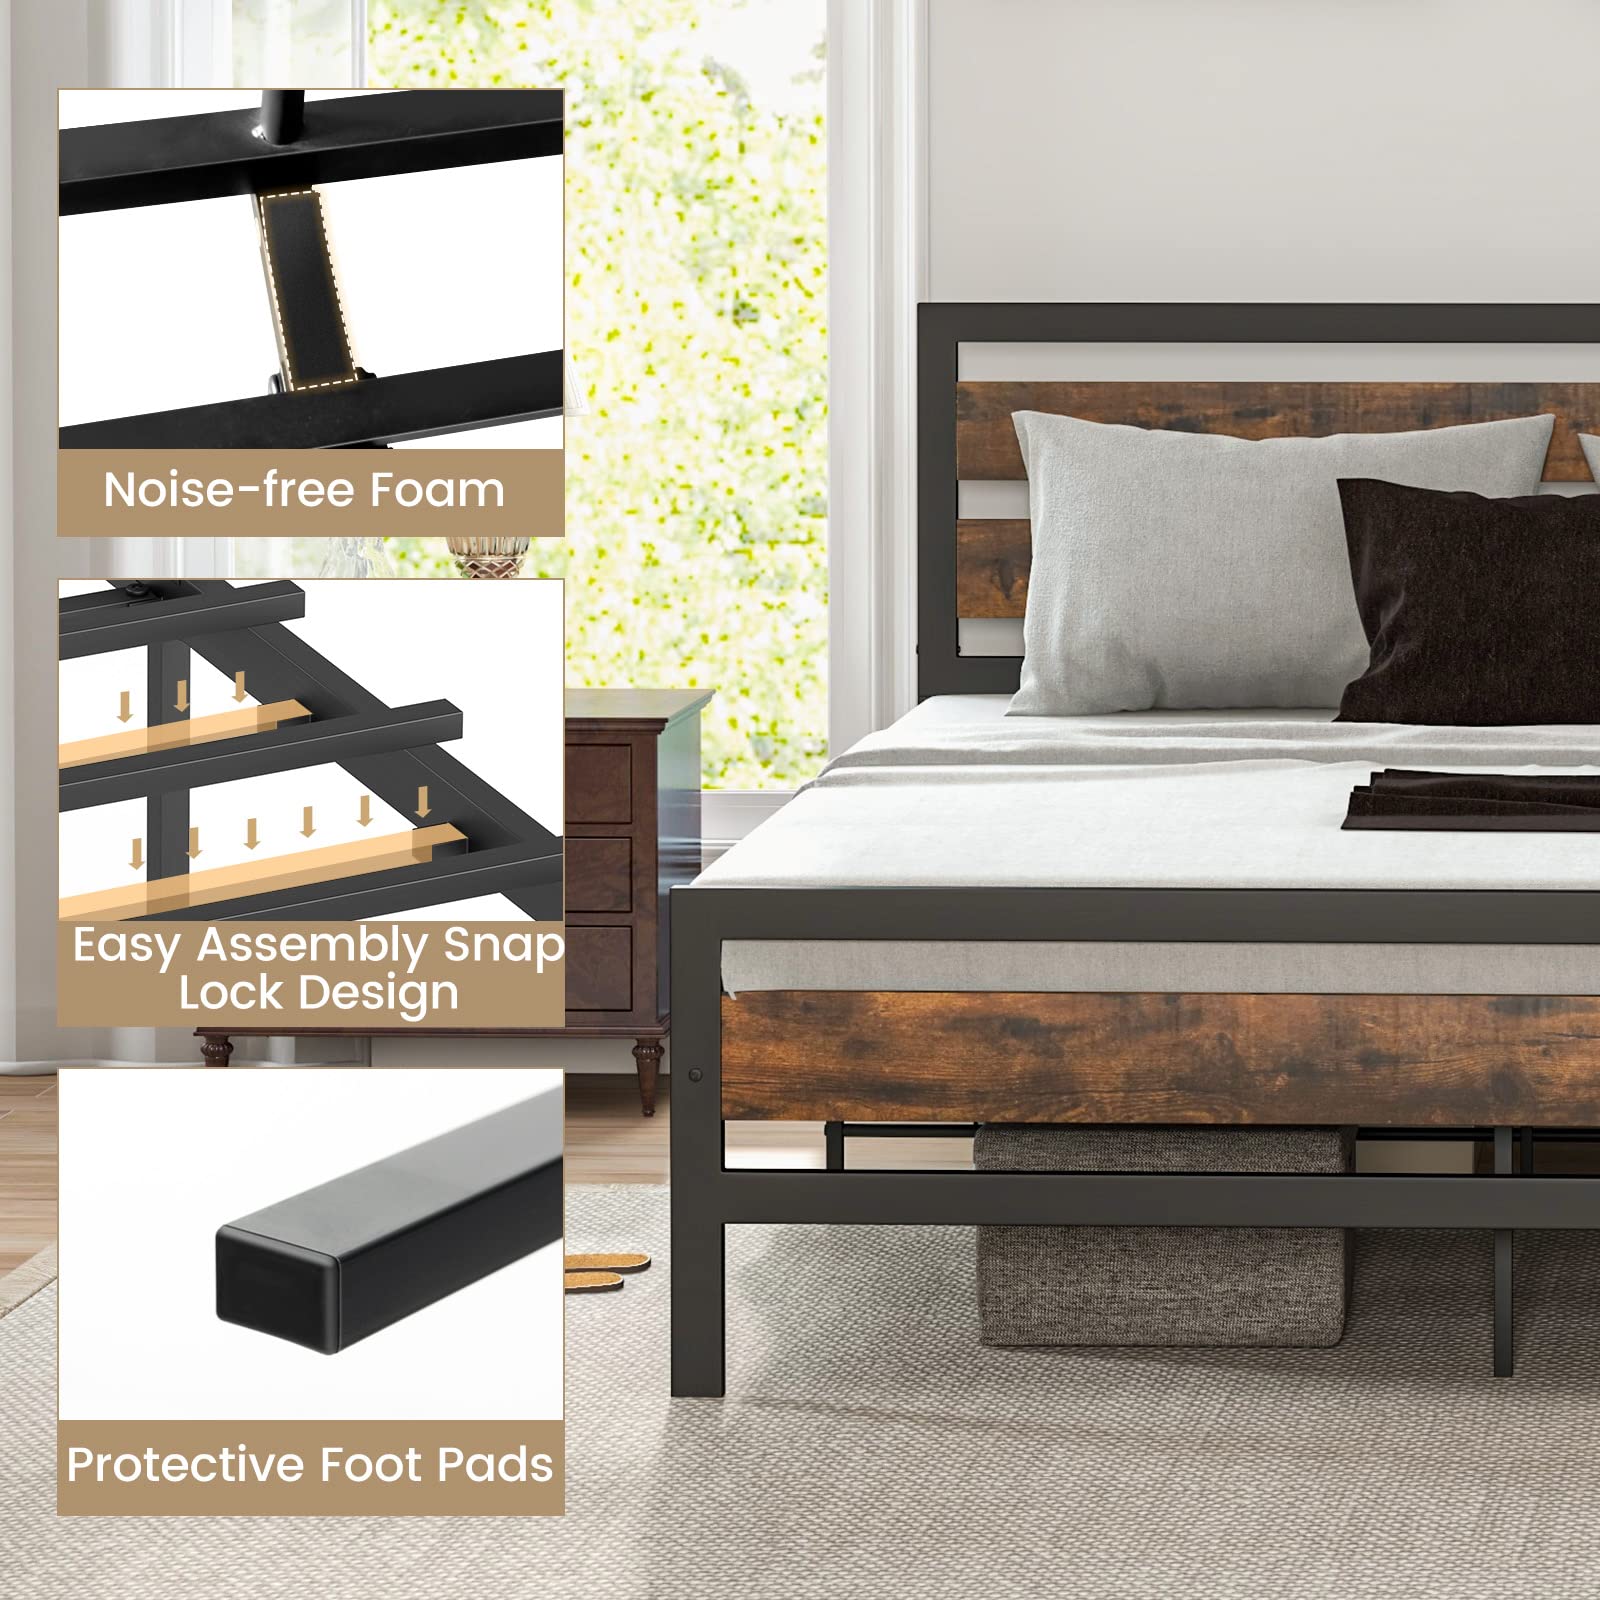 Giantex Queen Metal Platform Bed Frame with Wooden Headboard & Footboard, Rustic Brown